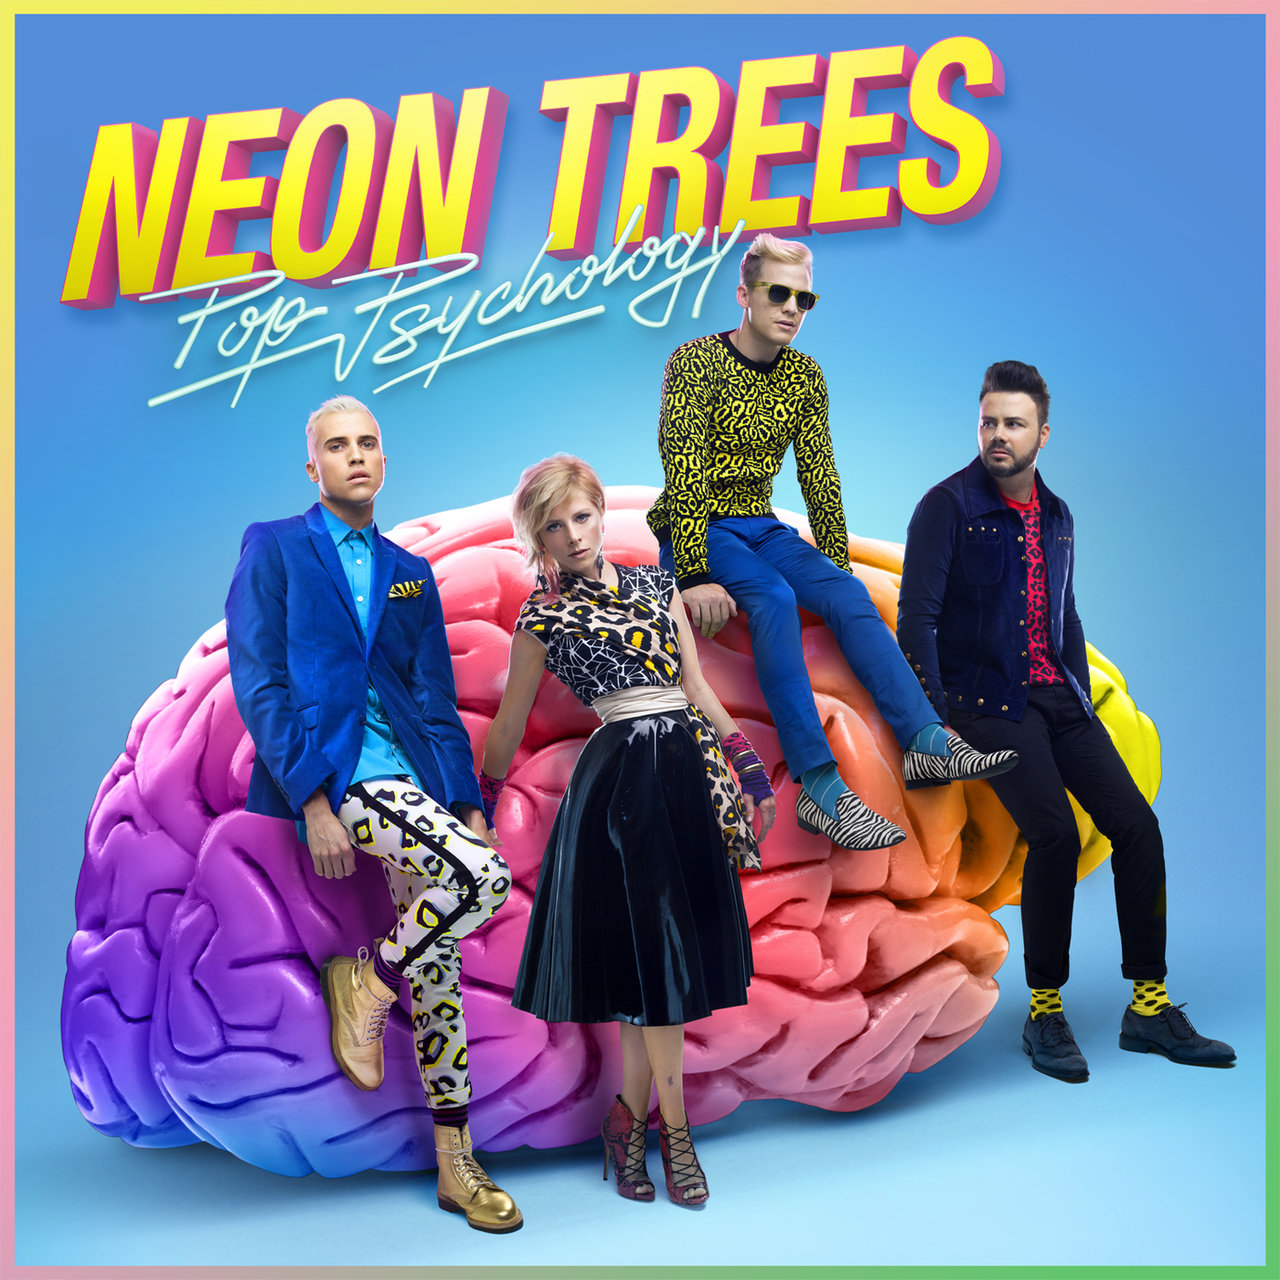 Neon Trees Pop Psychology cover artwork